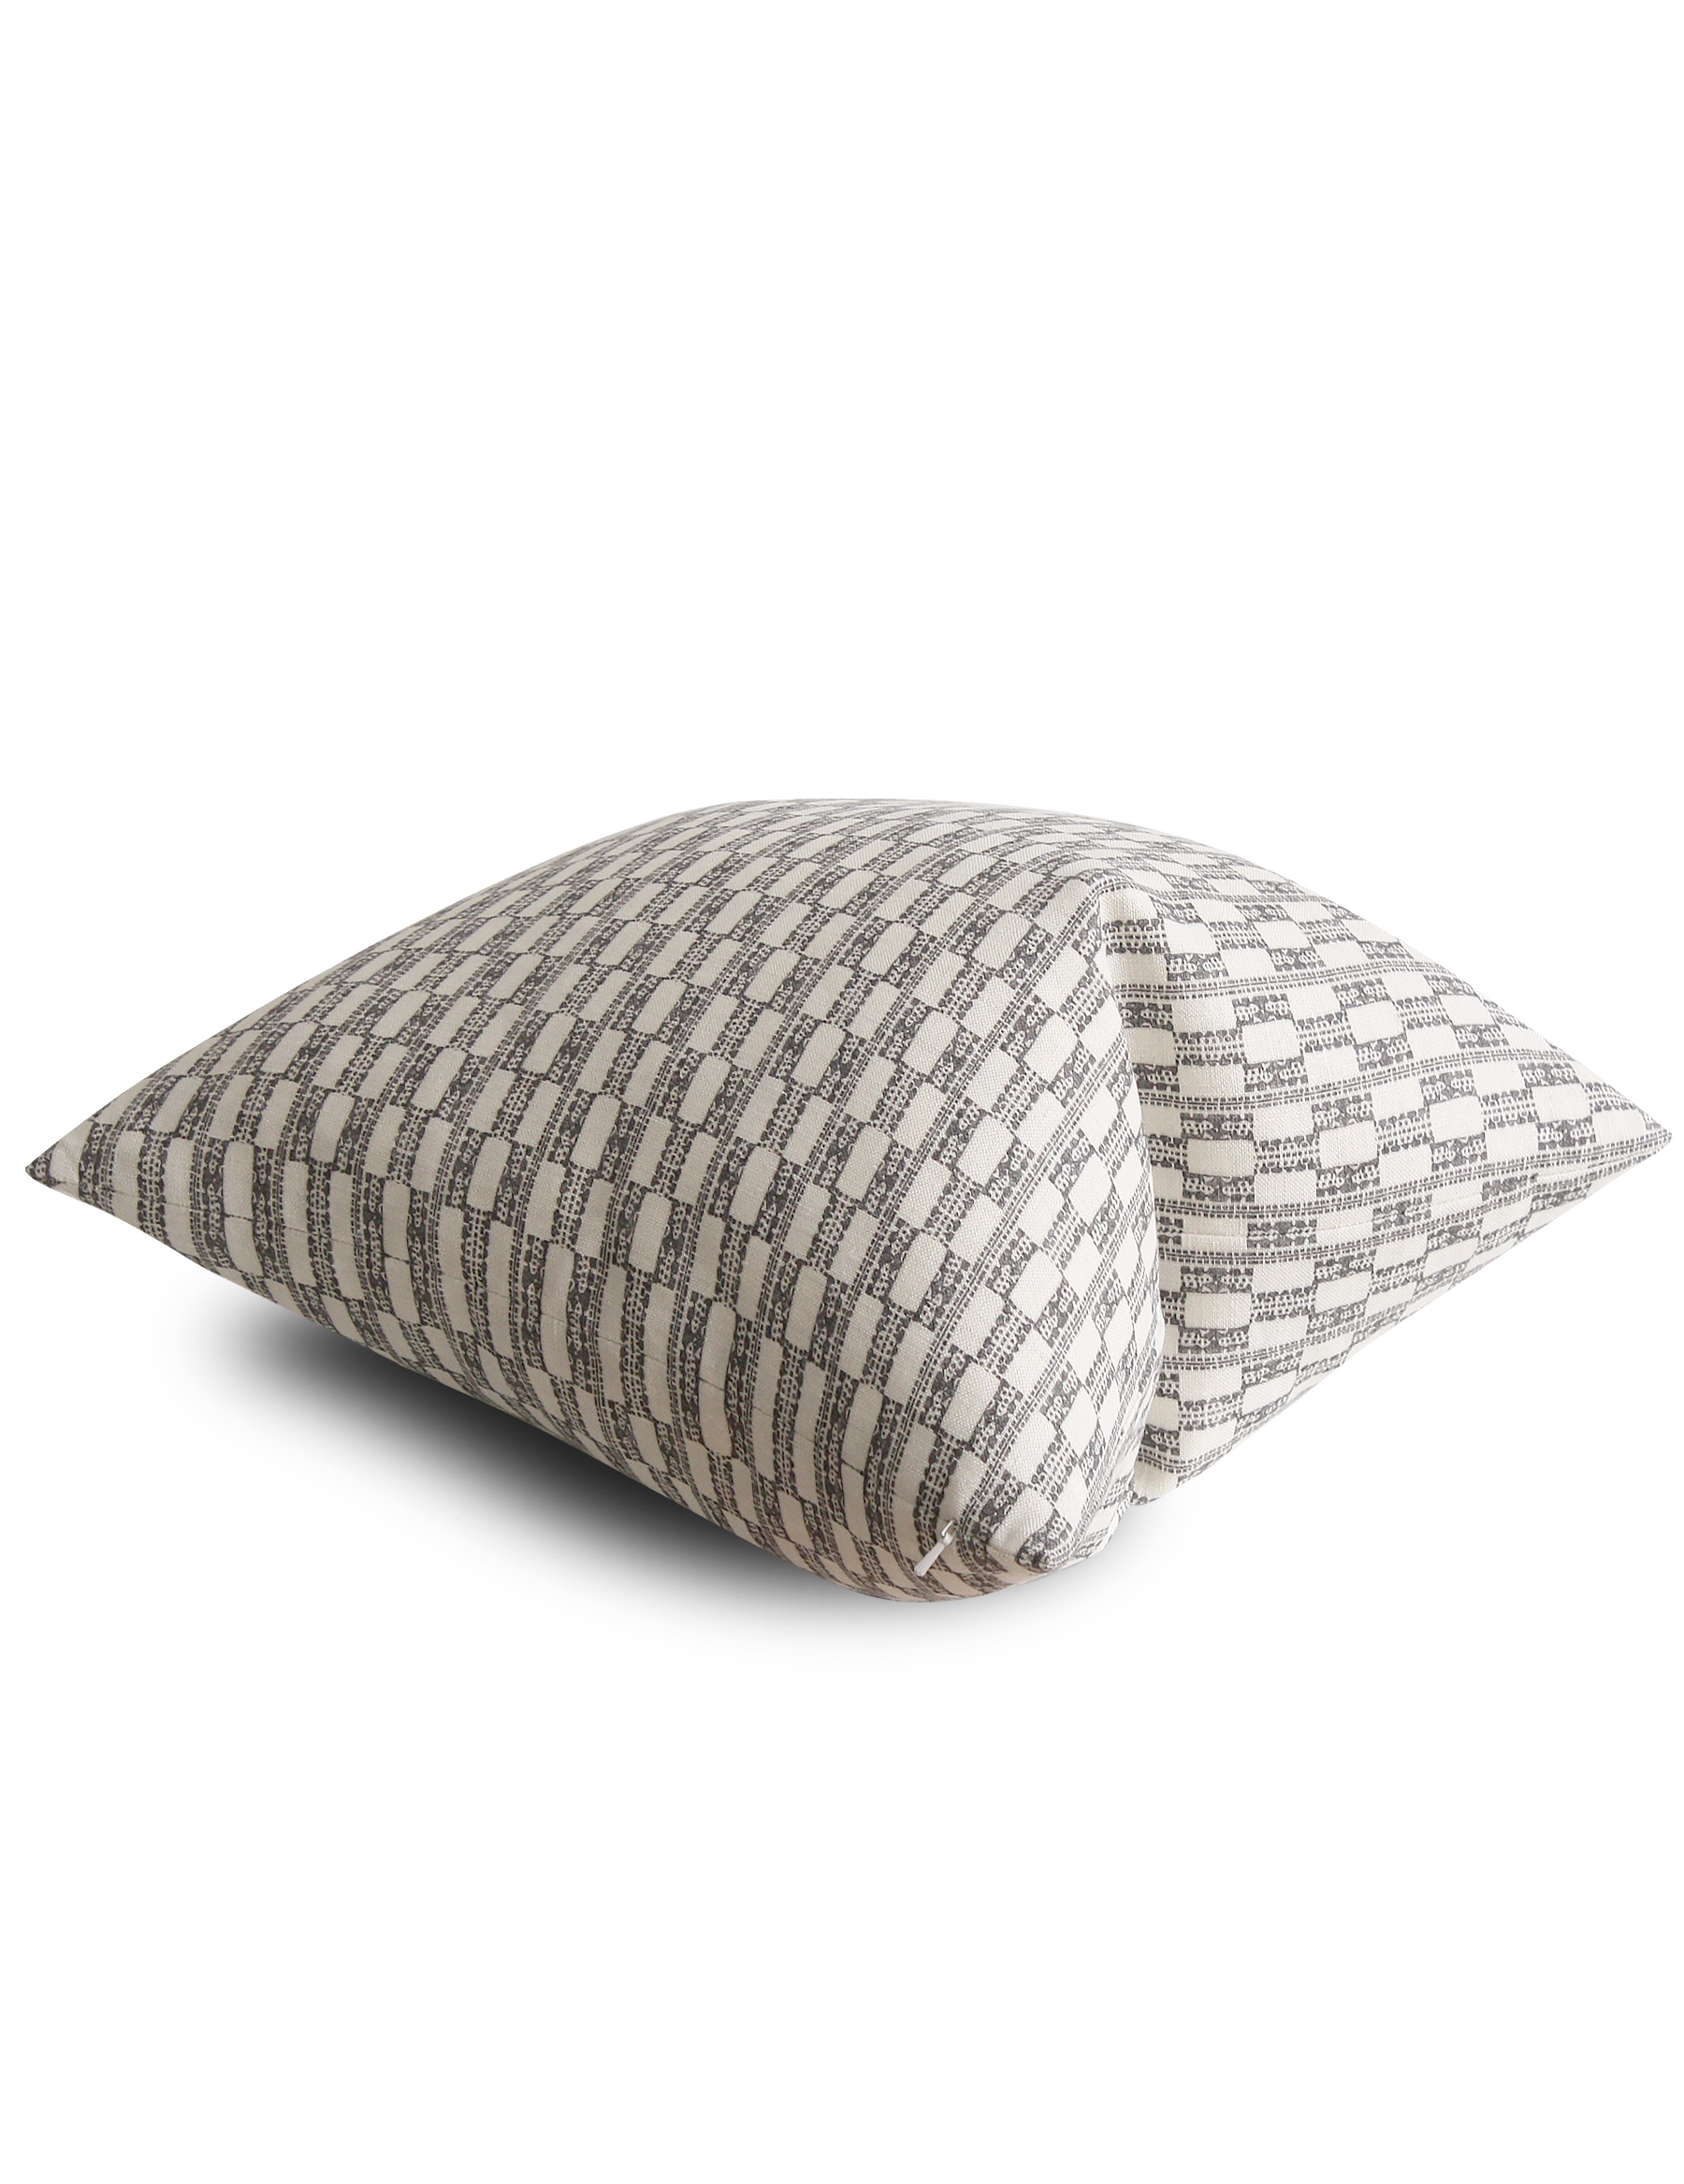 Chekka Pillow / Kohl Natural